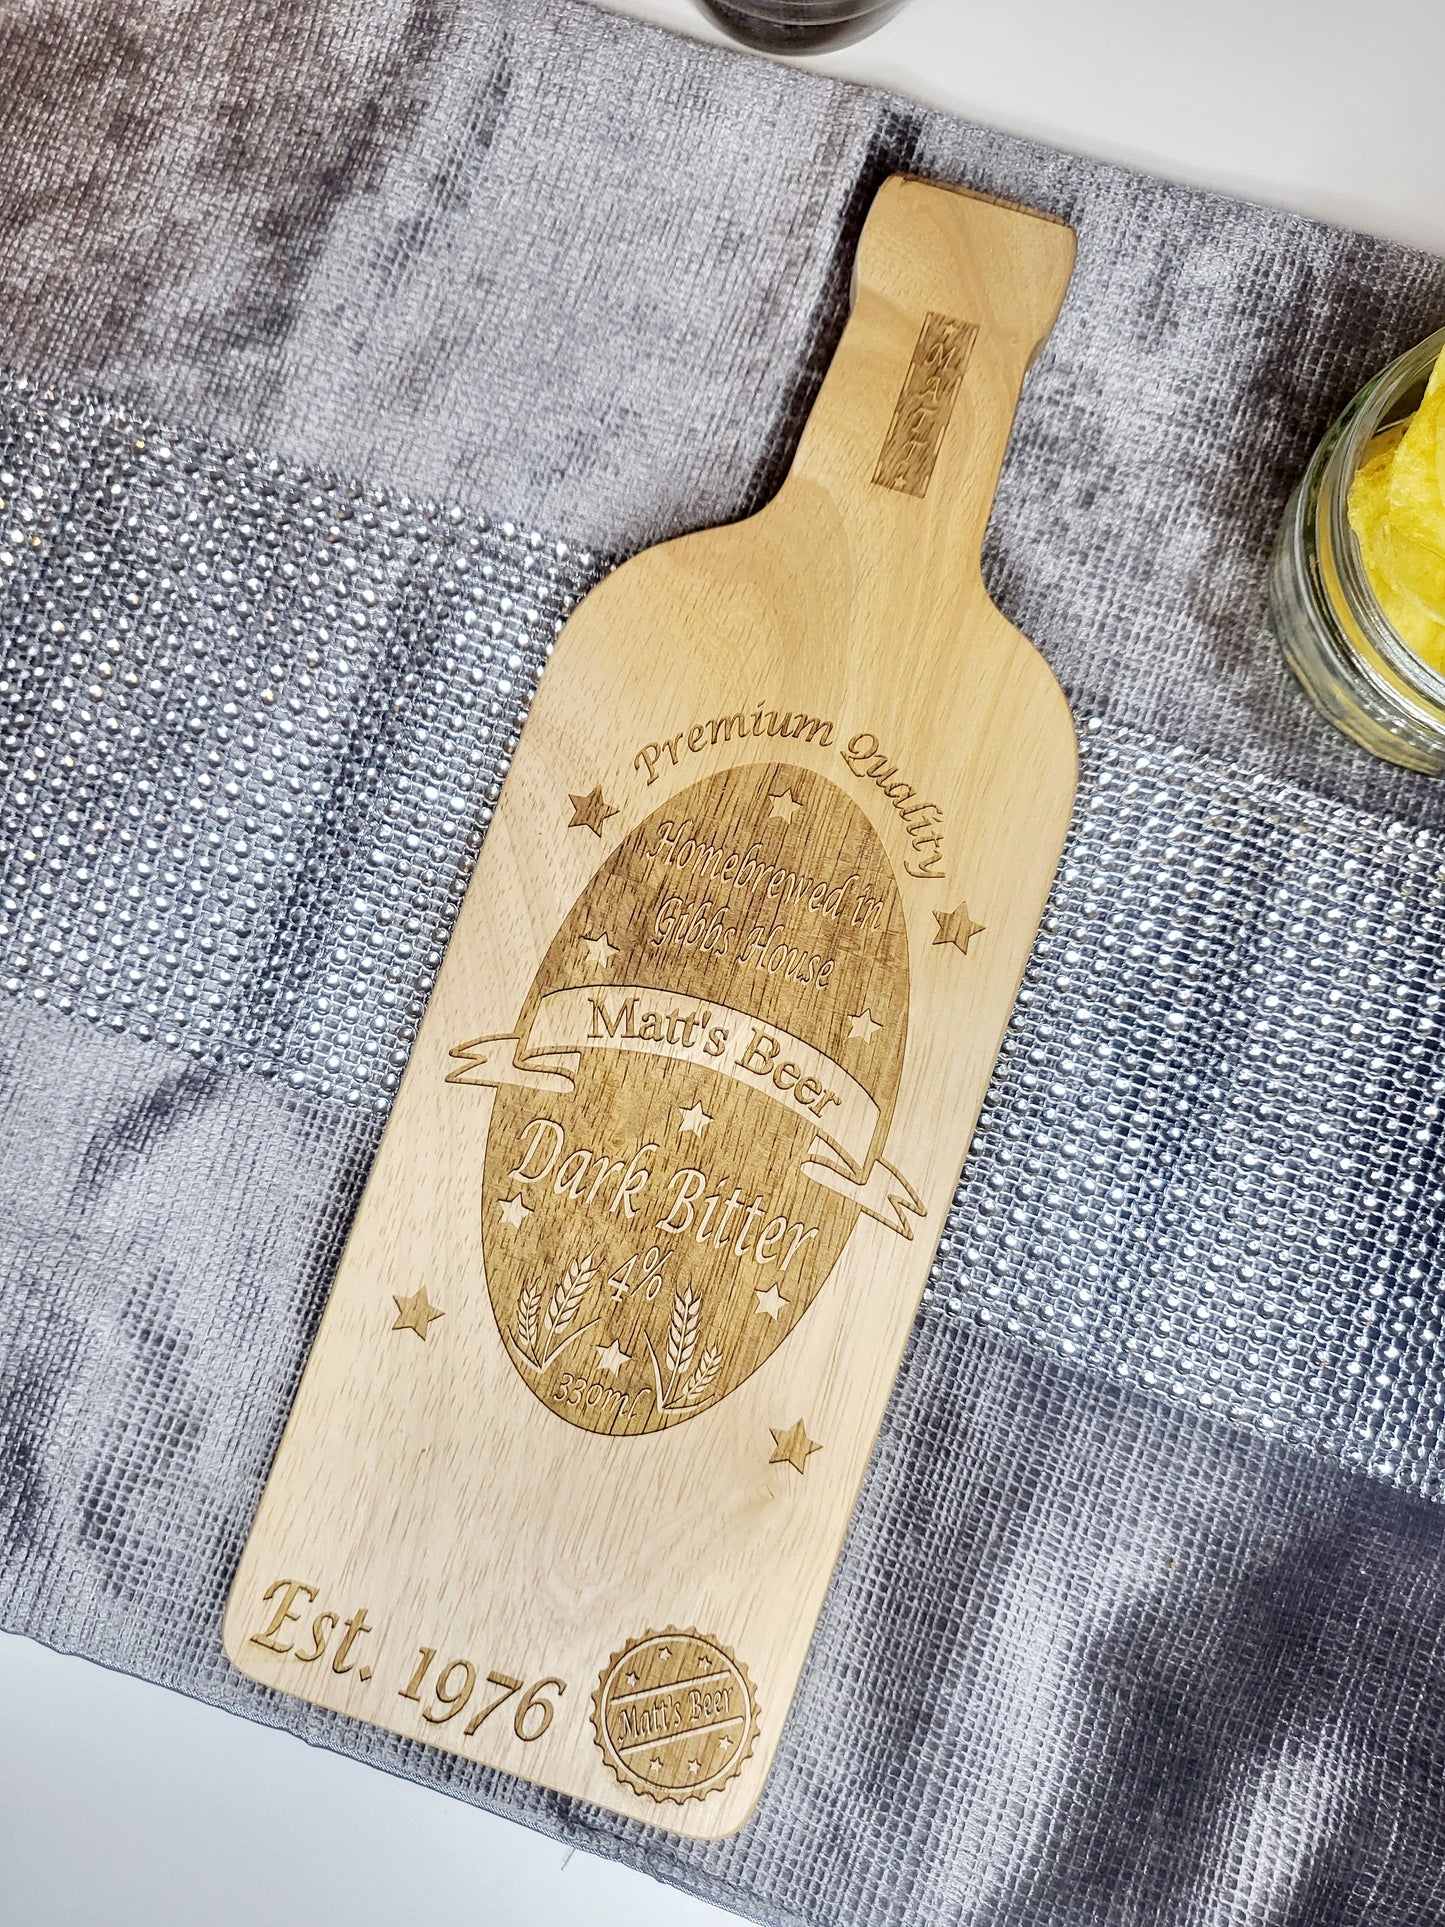 Personalised Beer Bottle Chopping Board